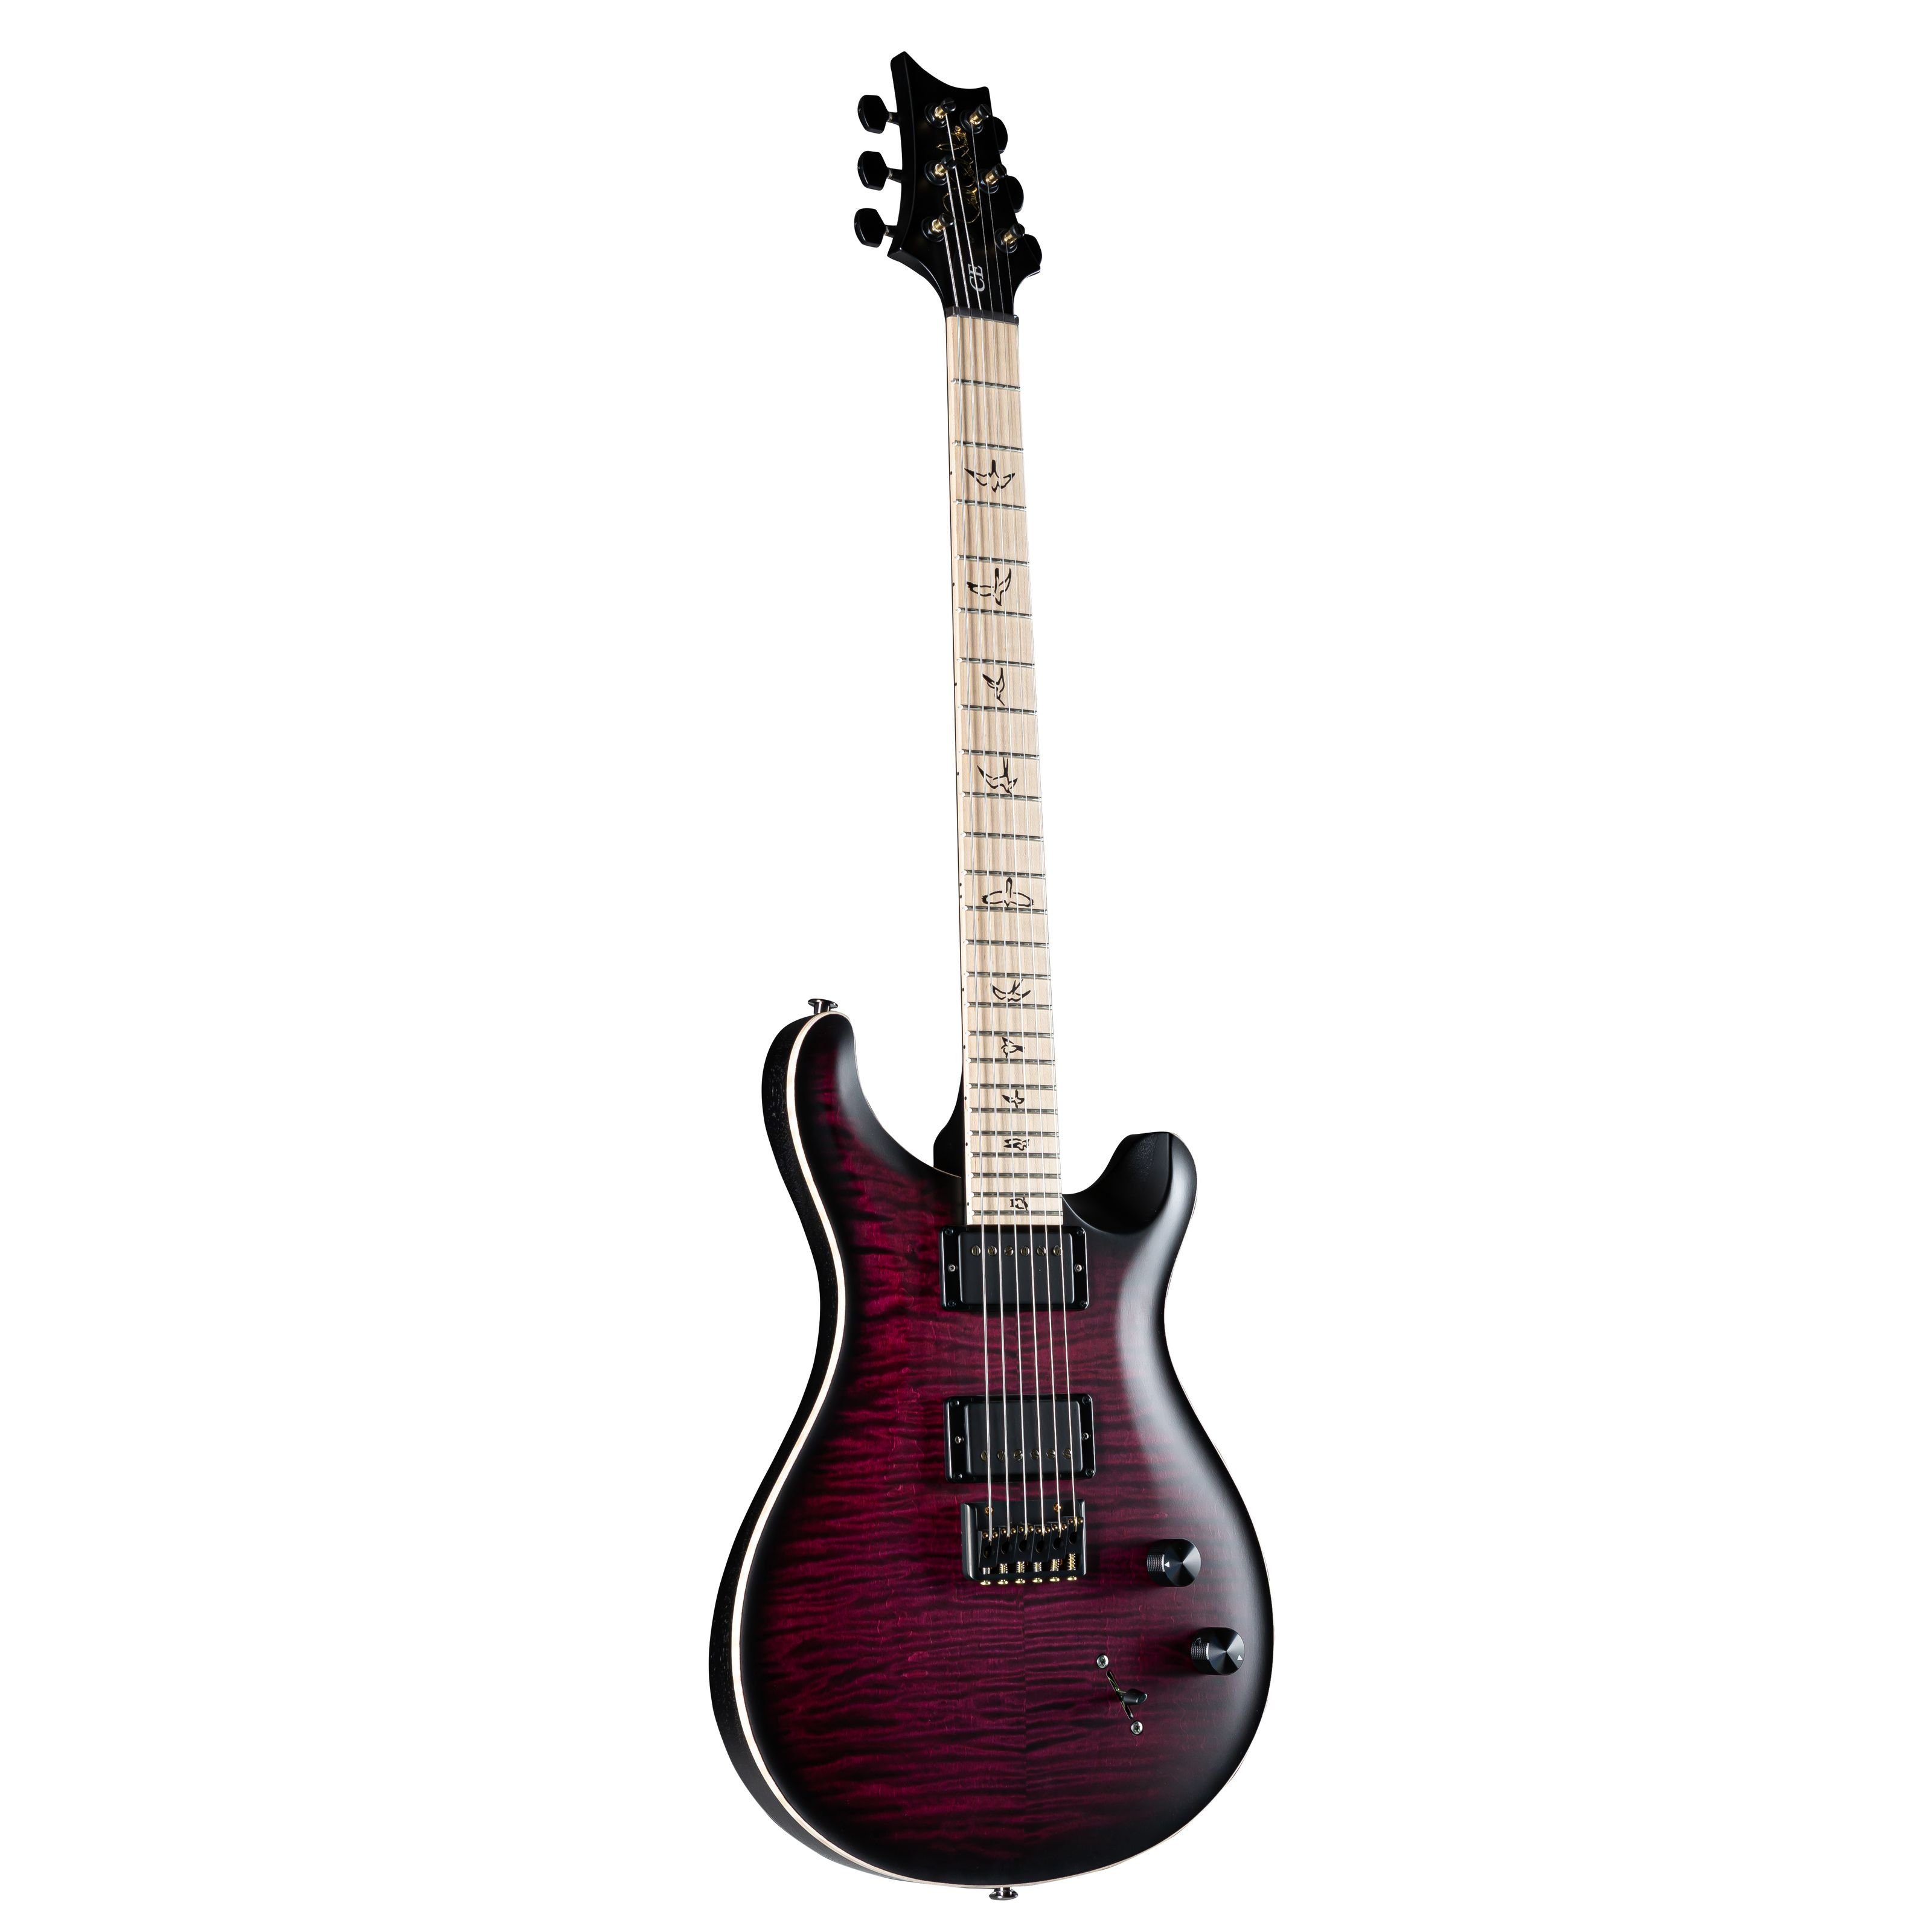 PRS E-Gitarre, Dustie CE24 Hardtail Burst Limited Edition - Custom E-Gitarre, E-Gitarren, Premium-Instrumente, Dustie Waring CE24 Hardtail Waring Burst Limited Edition - Custom